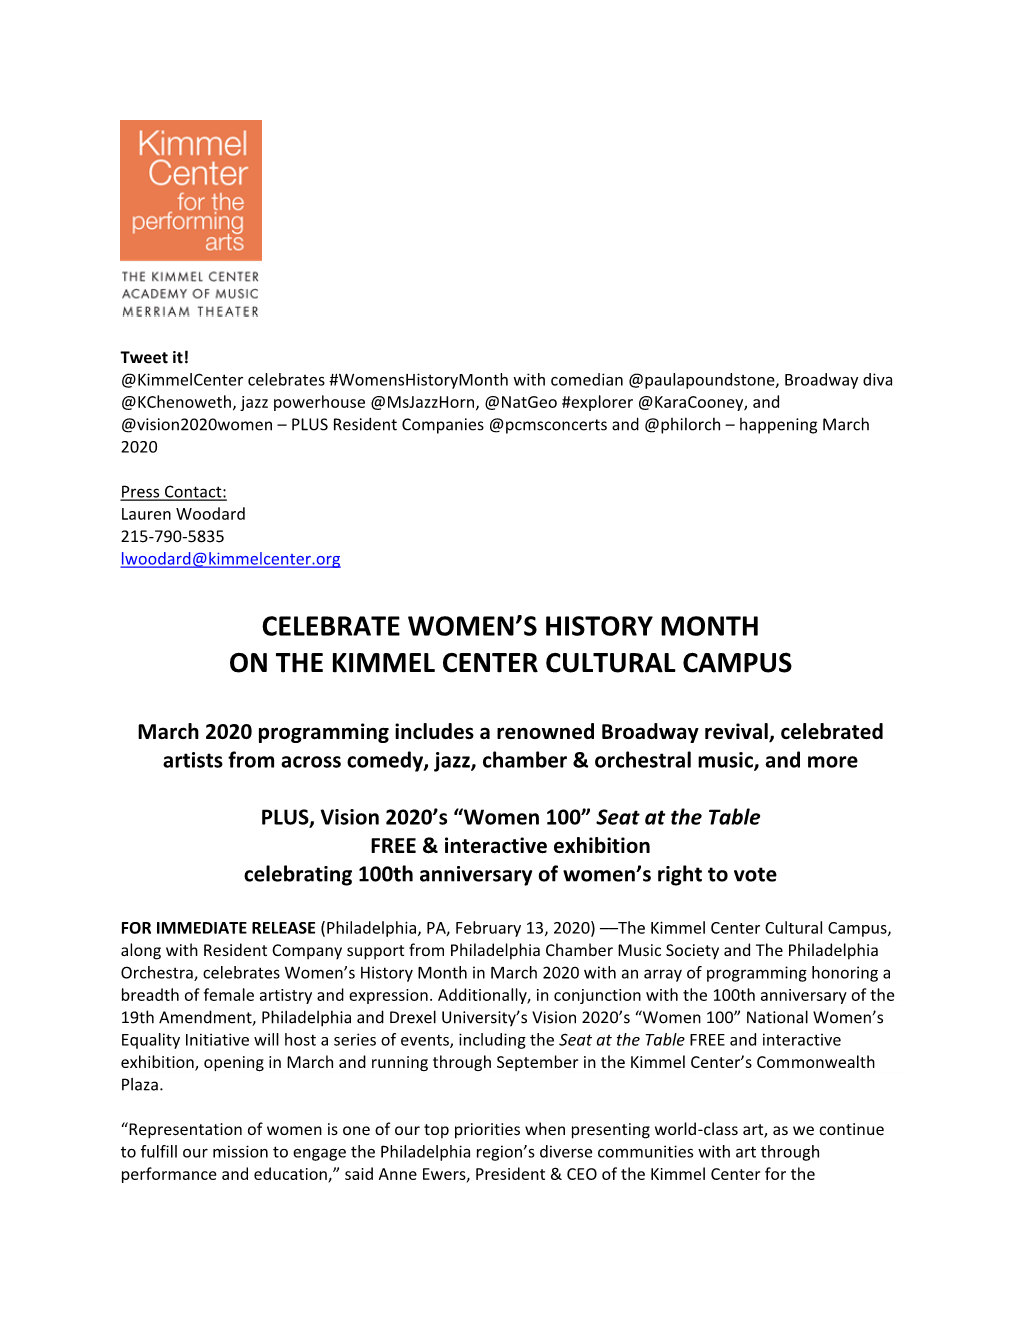 Celebrate Women's History Month on the Kimmel Center